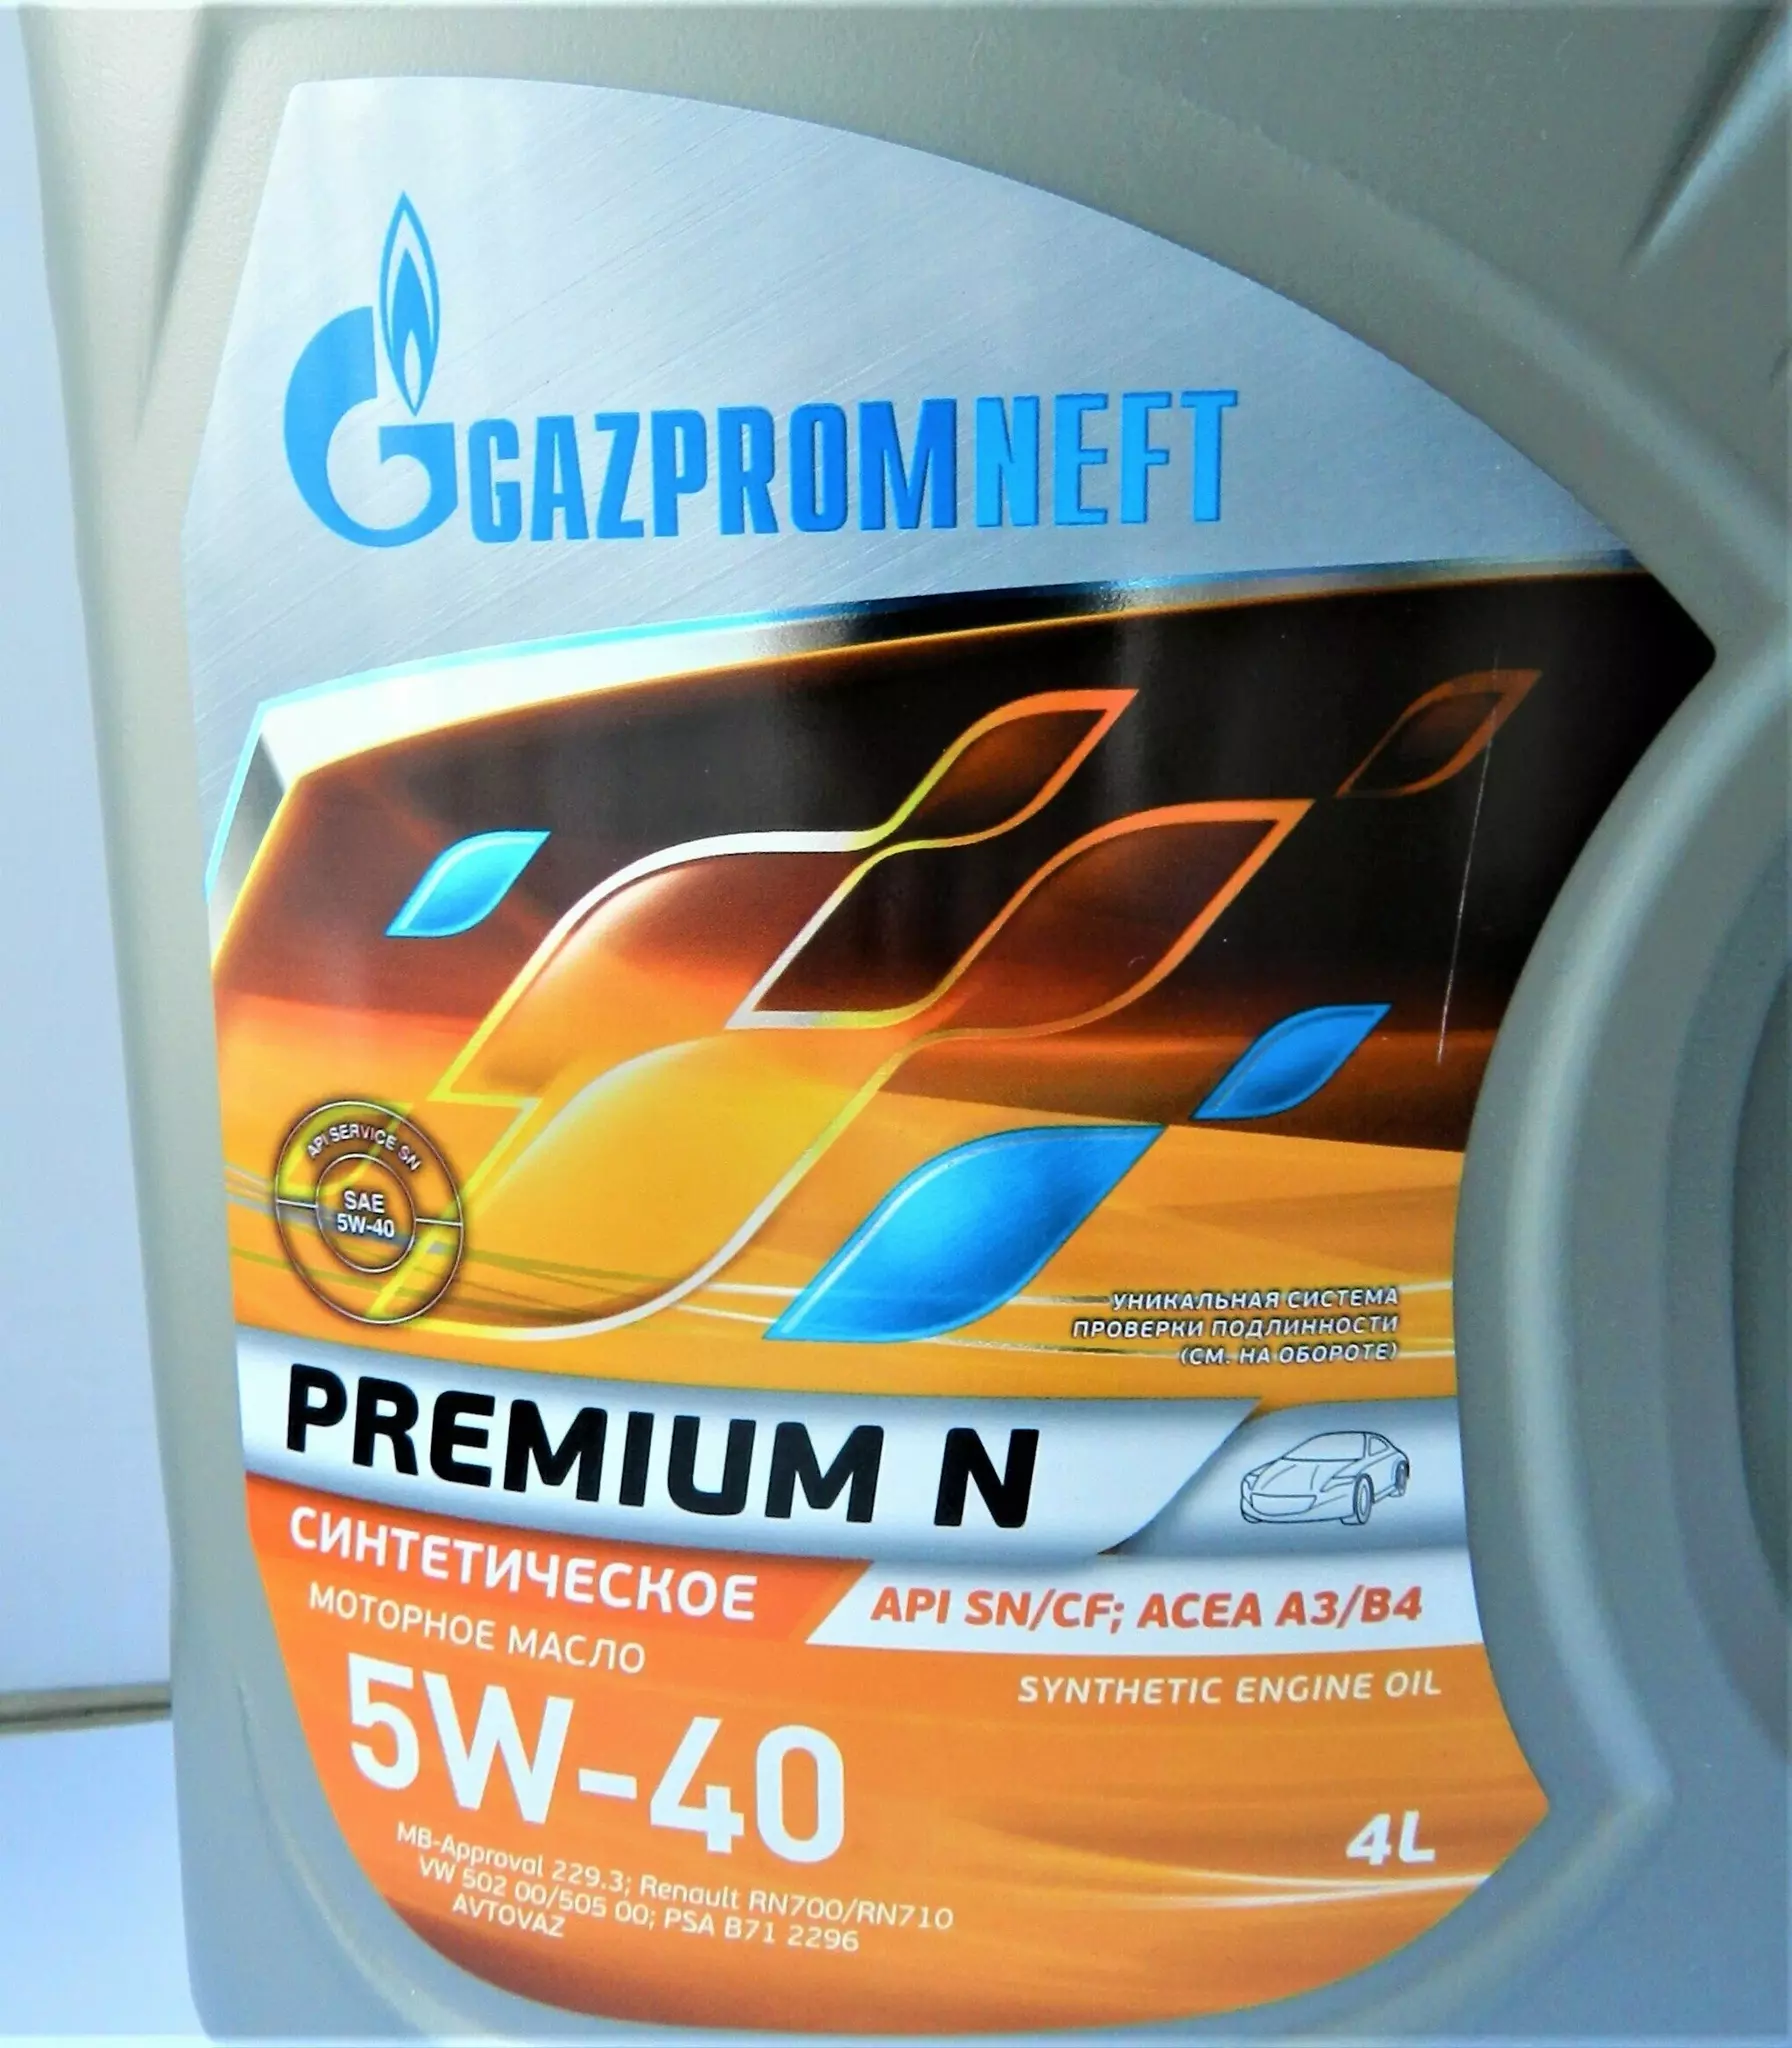 Gazpromneft Premium n 5w-40. Premium n5w40 4л. Масло Premium n 5w-40 4л Gazpromneft. Gazpromneft масло Premium n 5w-40 4л ЕОМ номер. Масло газпромнефть premium n 5w40